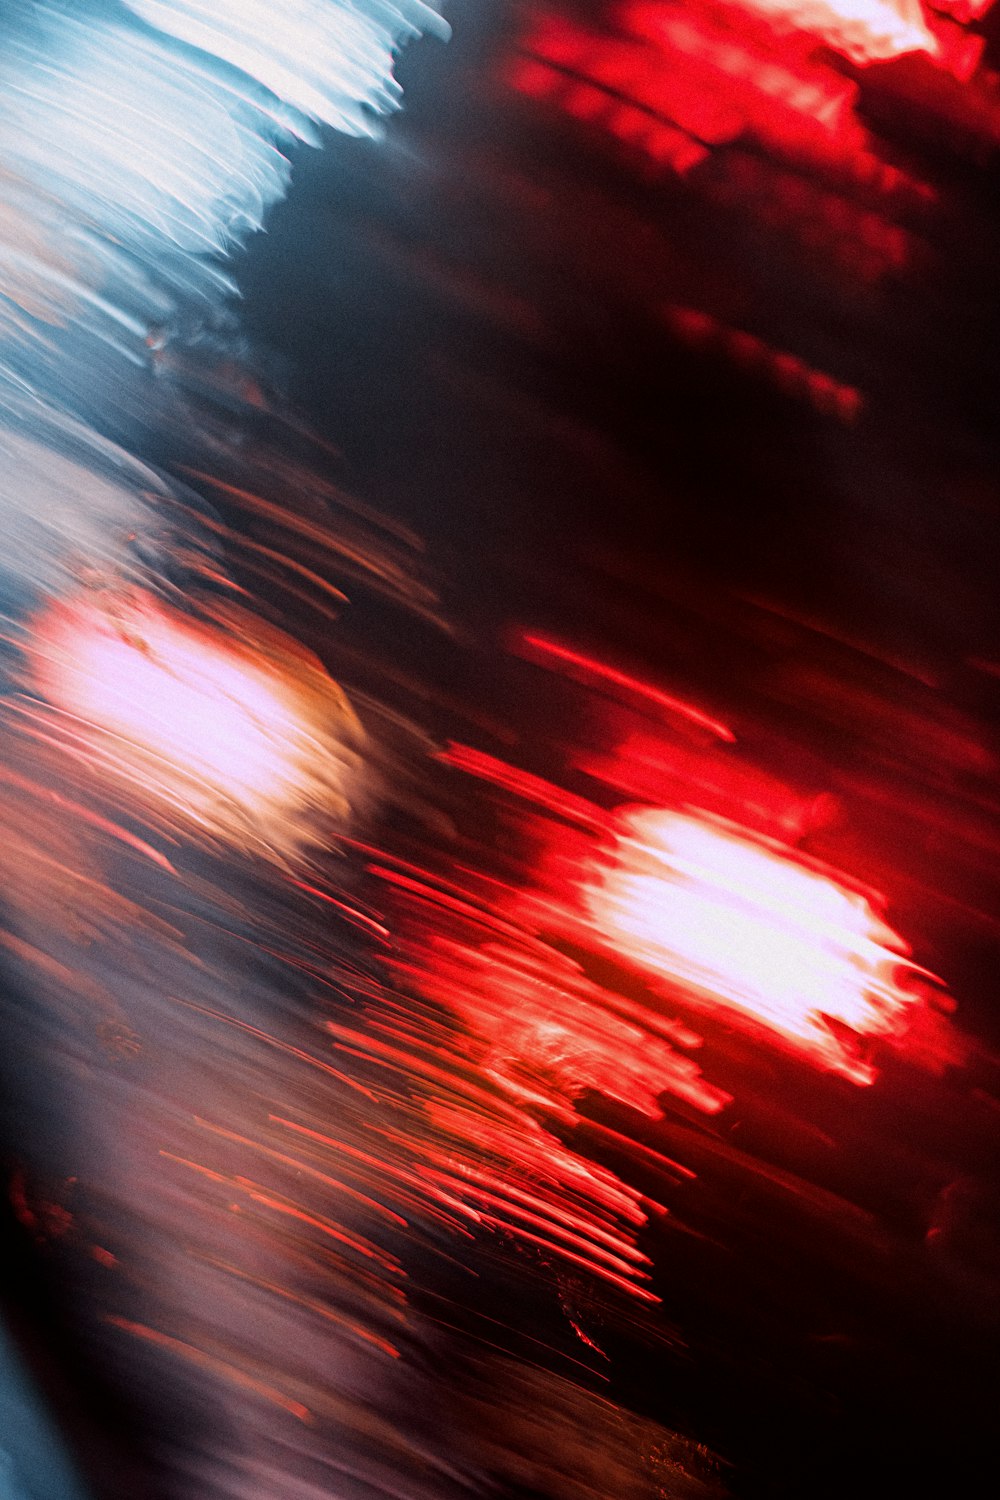 a blurry image of a street light